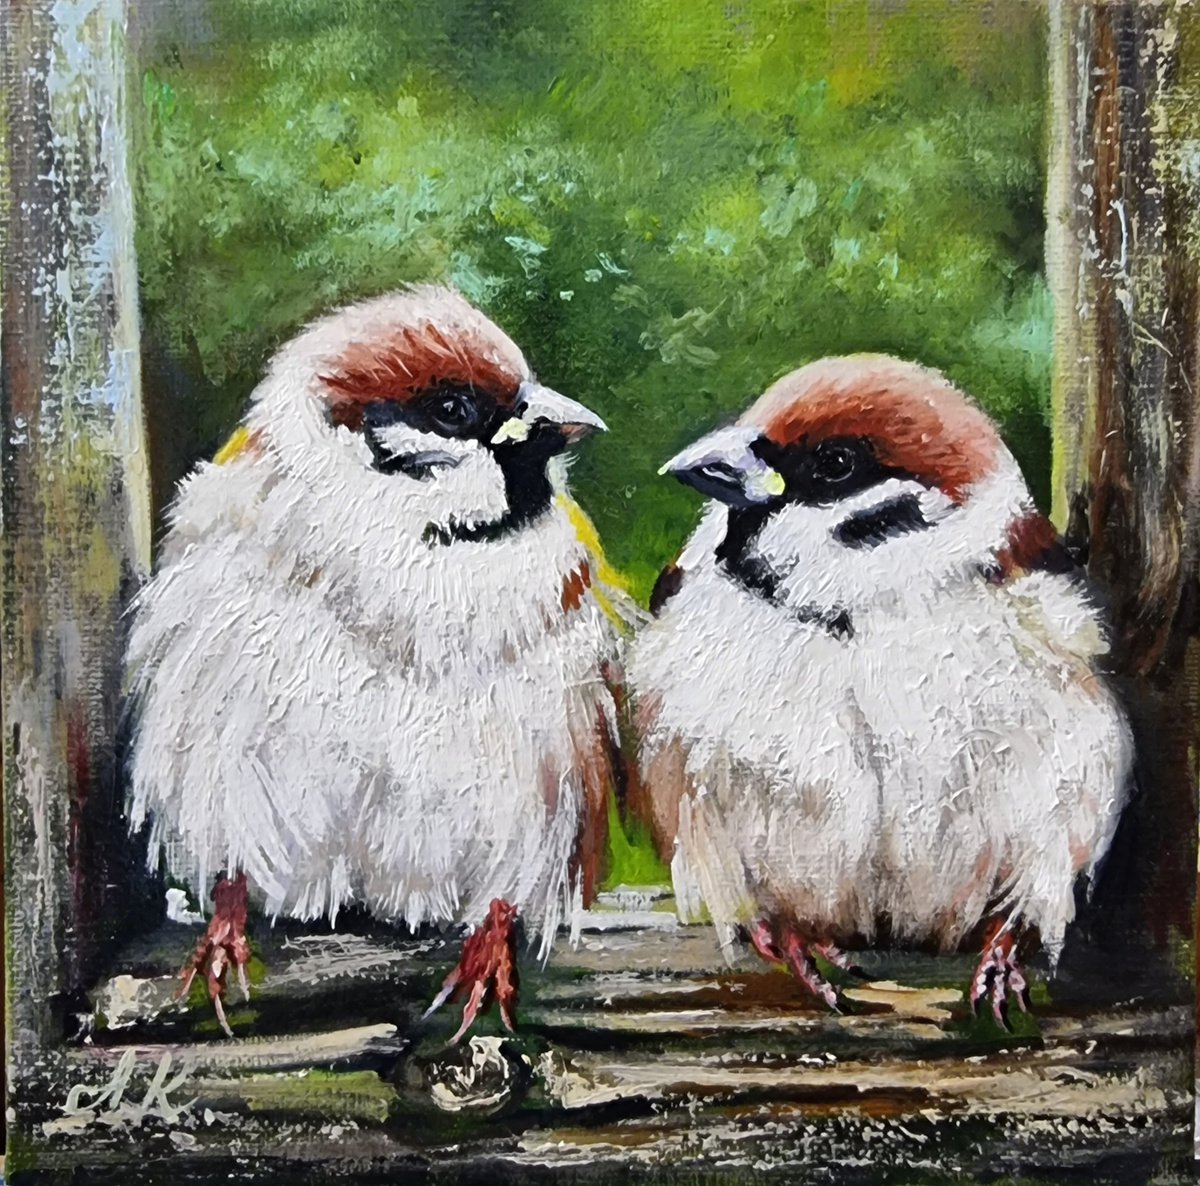 Come on, move over. sparrow birds 2021 by Anna Kotelnik